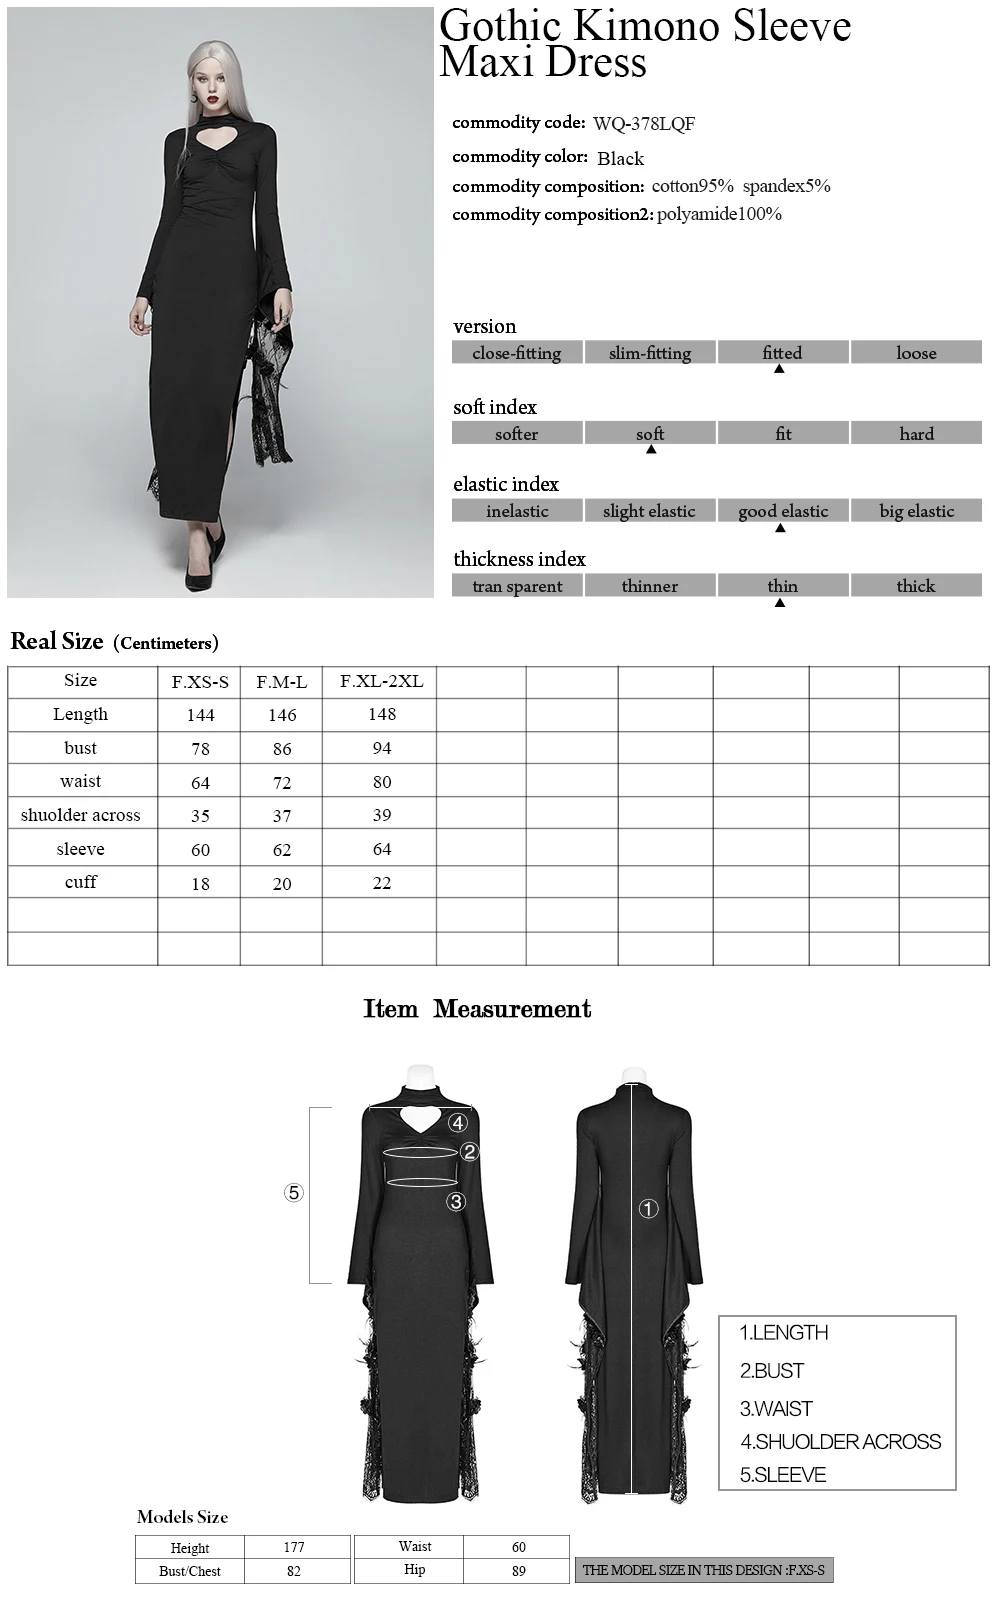 WQ-378 PUNK RAVE Gothic Kimono Sleeve Maxi Dress with drawstring opening fork